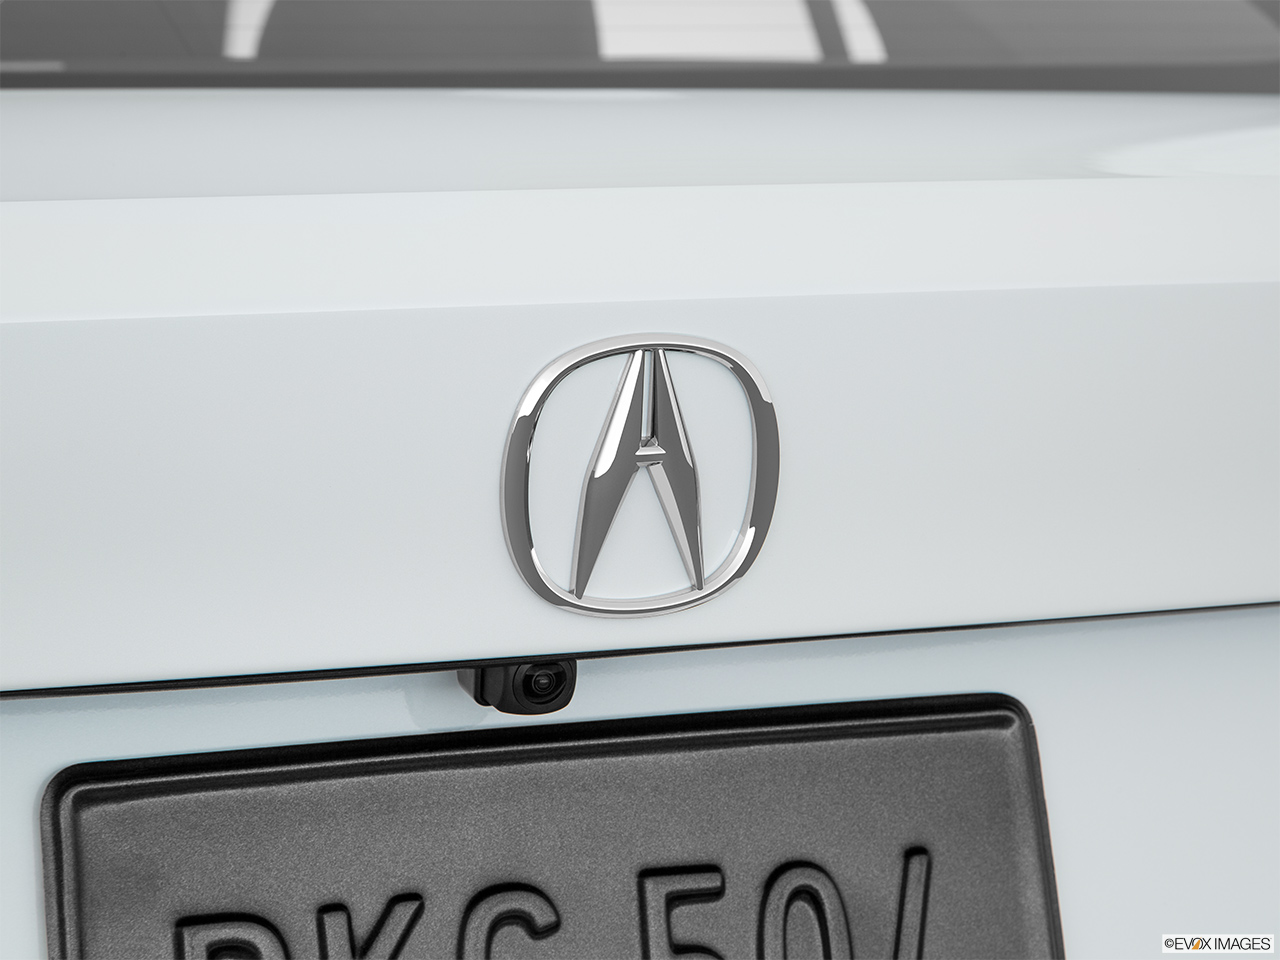 2017 Acura TLX 3.5L Rear manufacture badge/emblem 